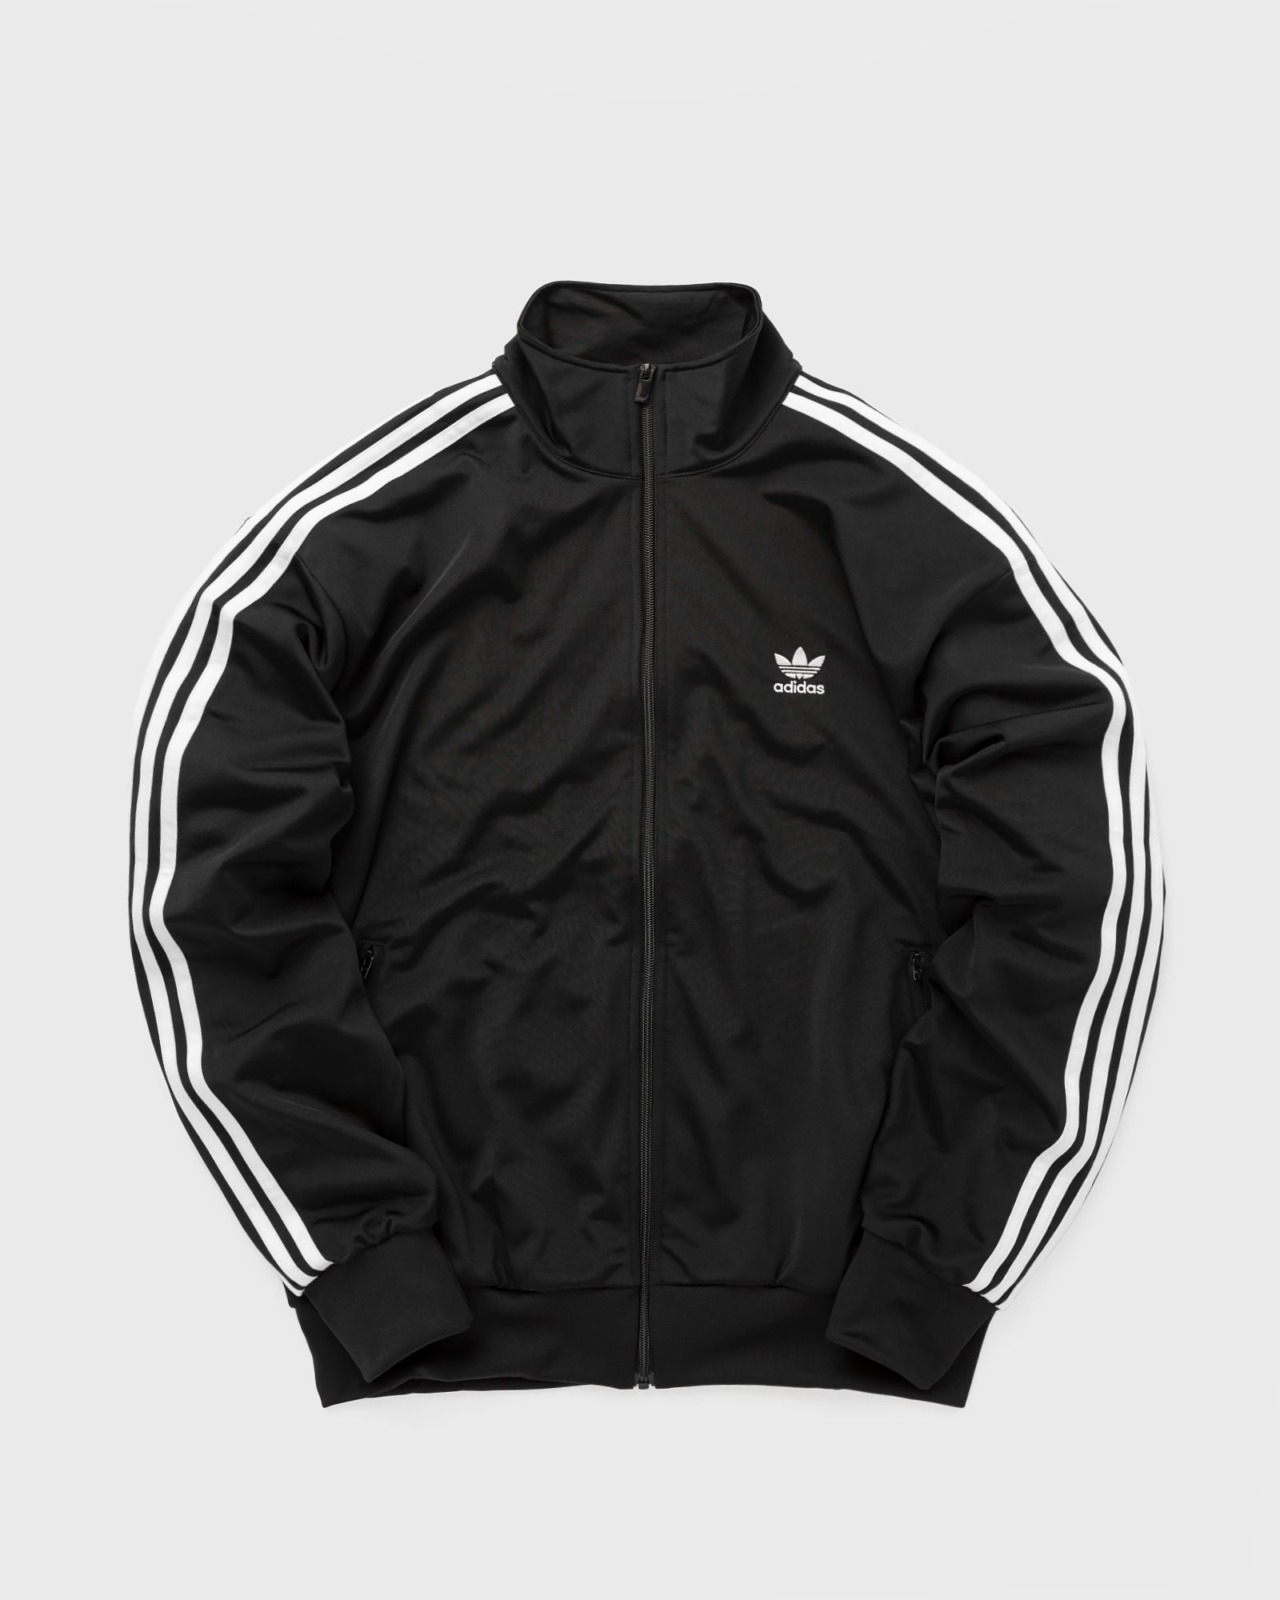 Adidas Men's Jacket in Black from Bstn GOOFASH